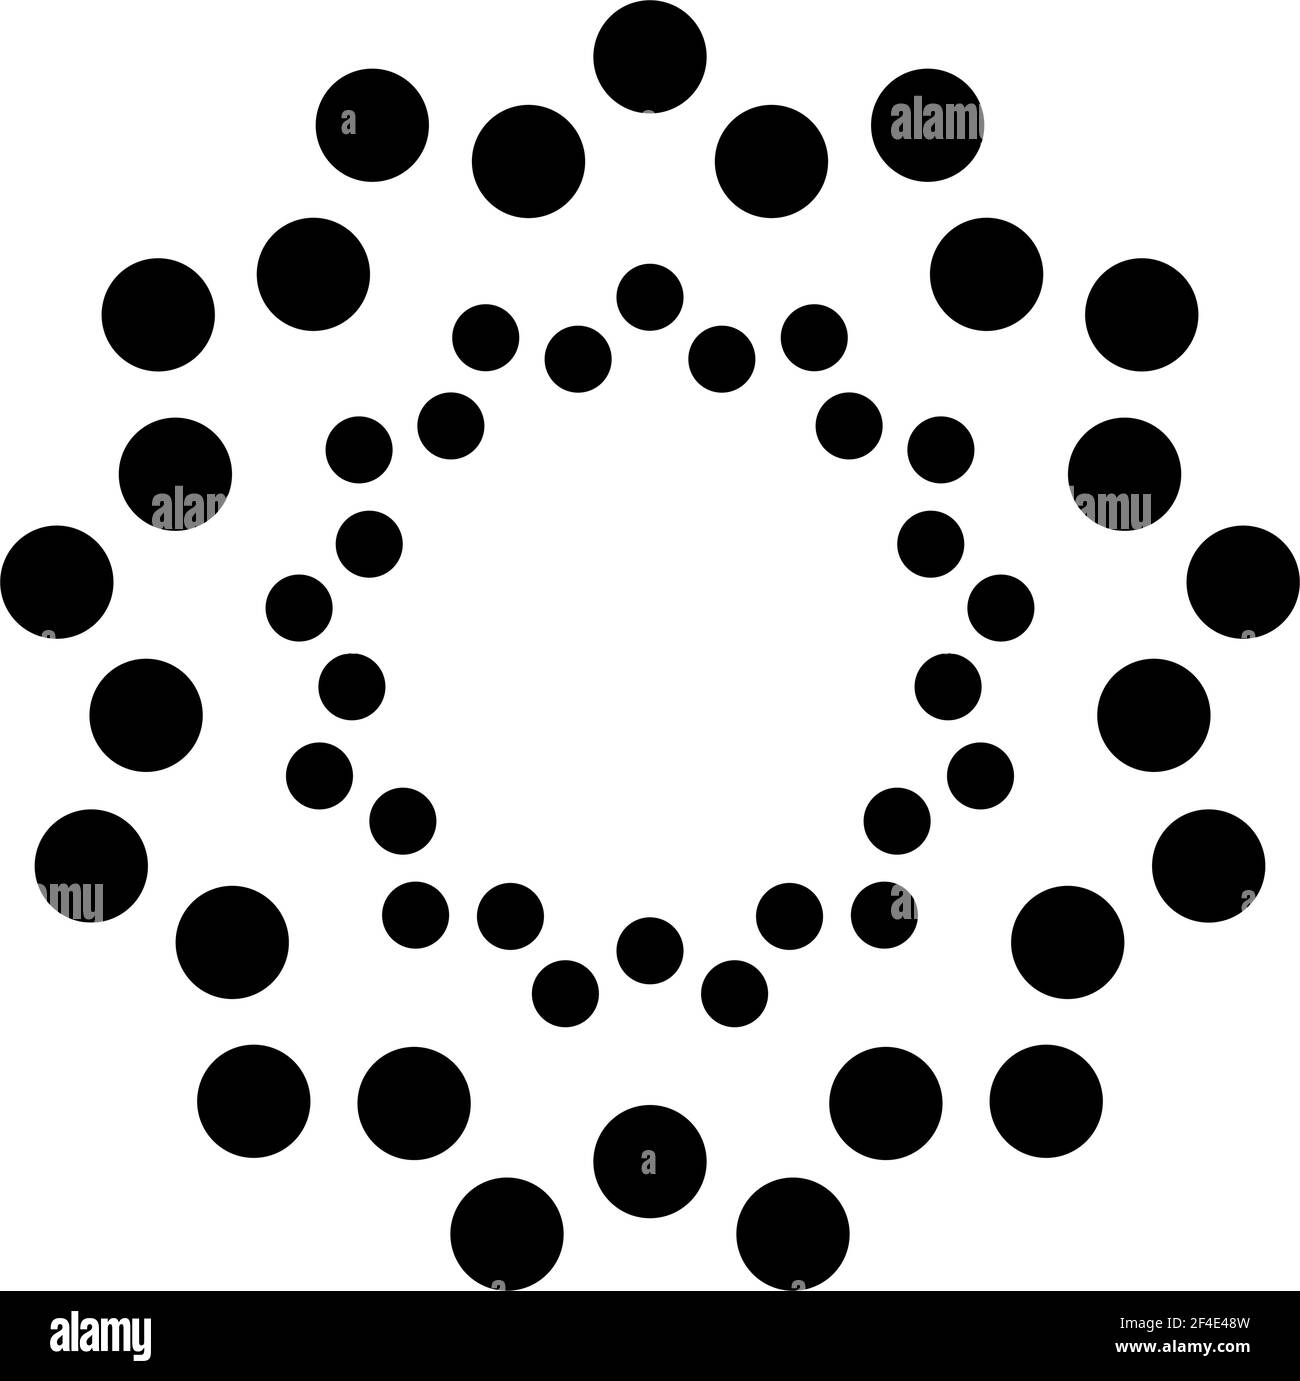 Simple graphic made of dots, circles. Basic dotted circular ...